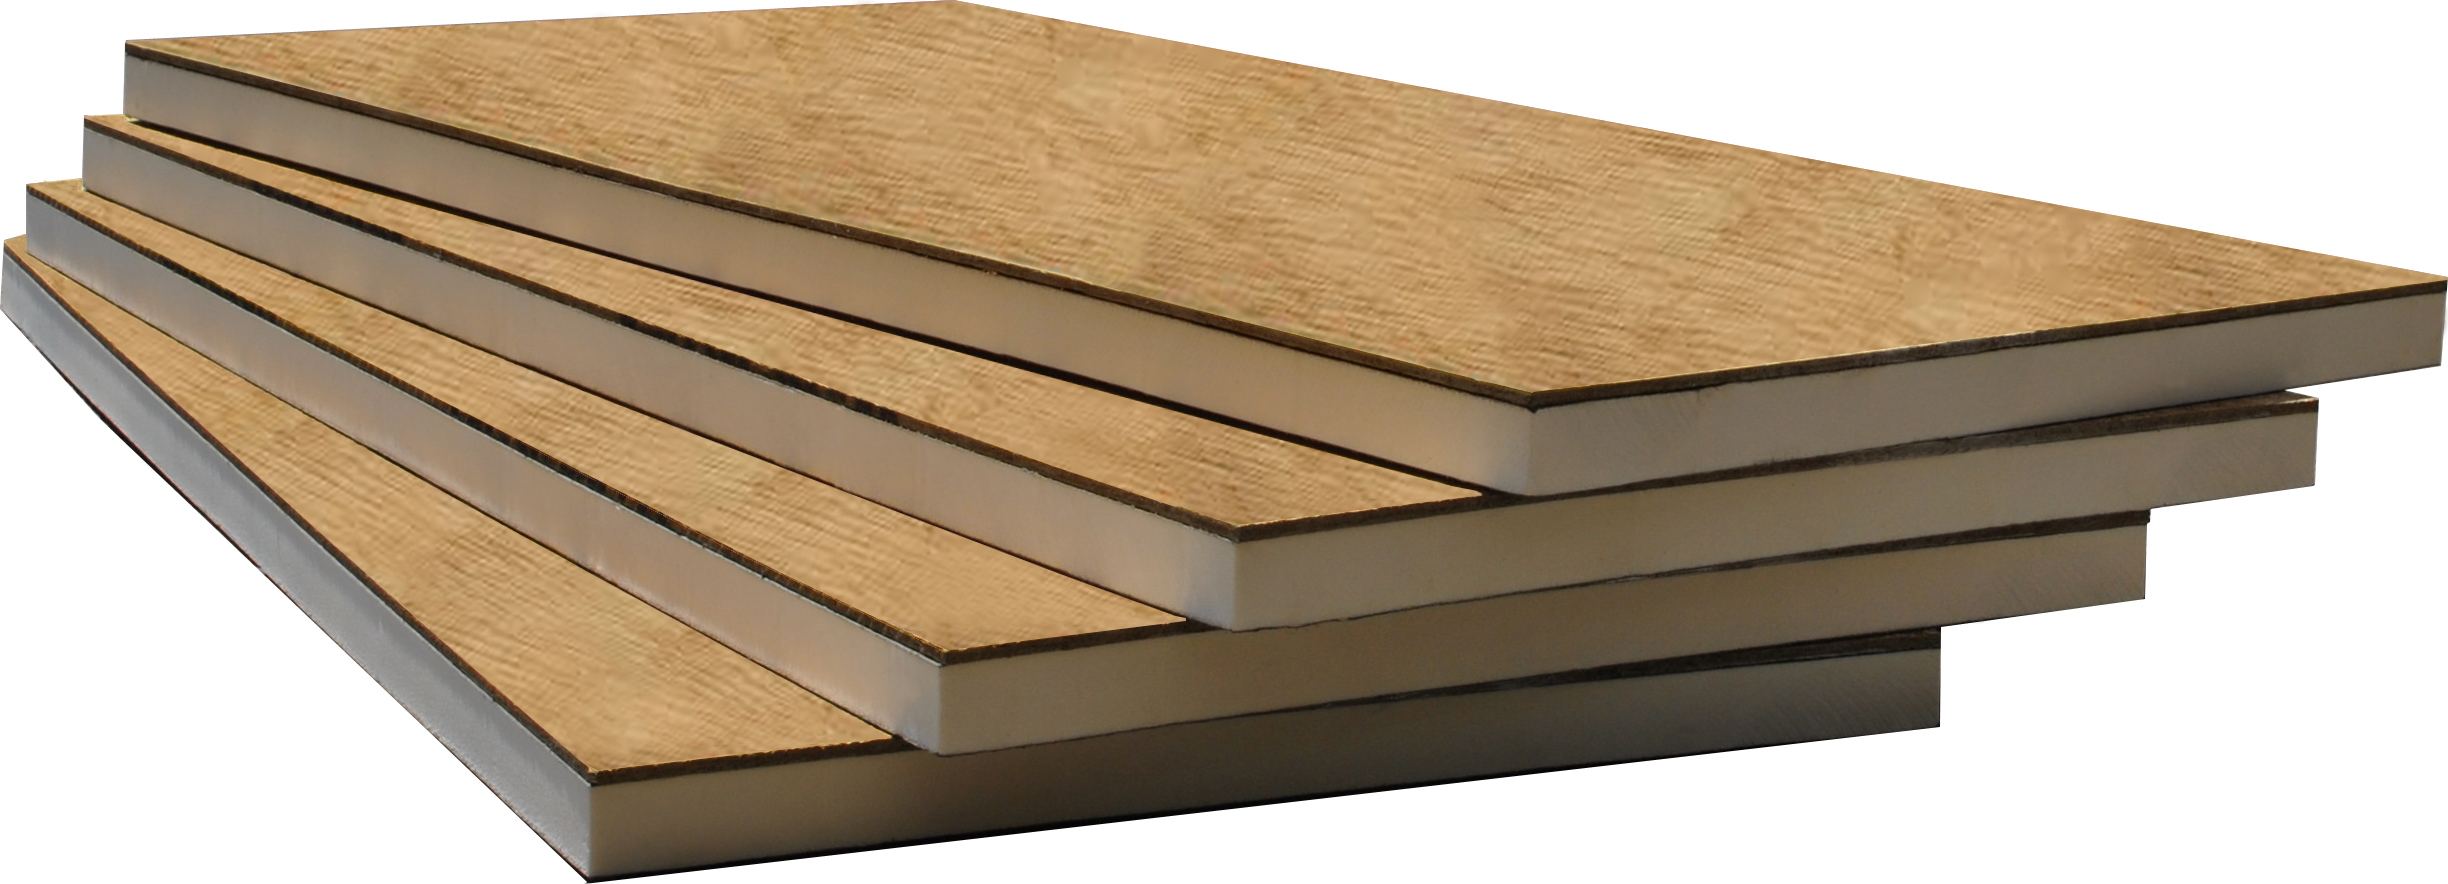 Láminas de madera para recubrimiento - Aramol